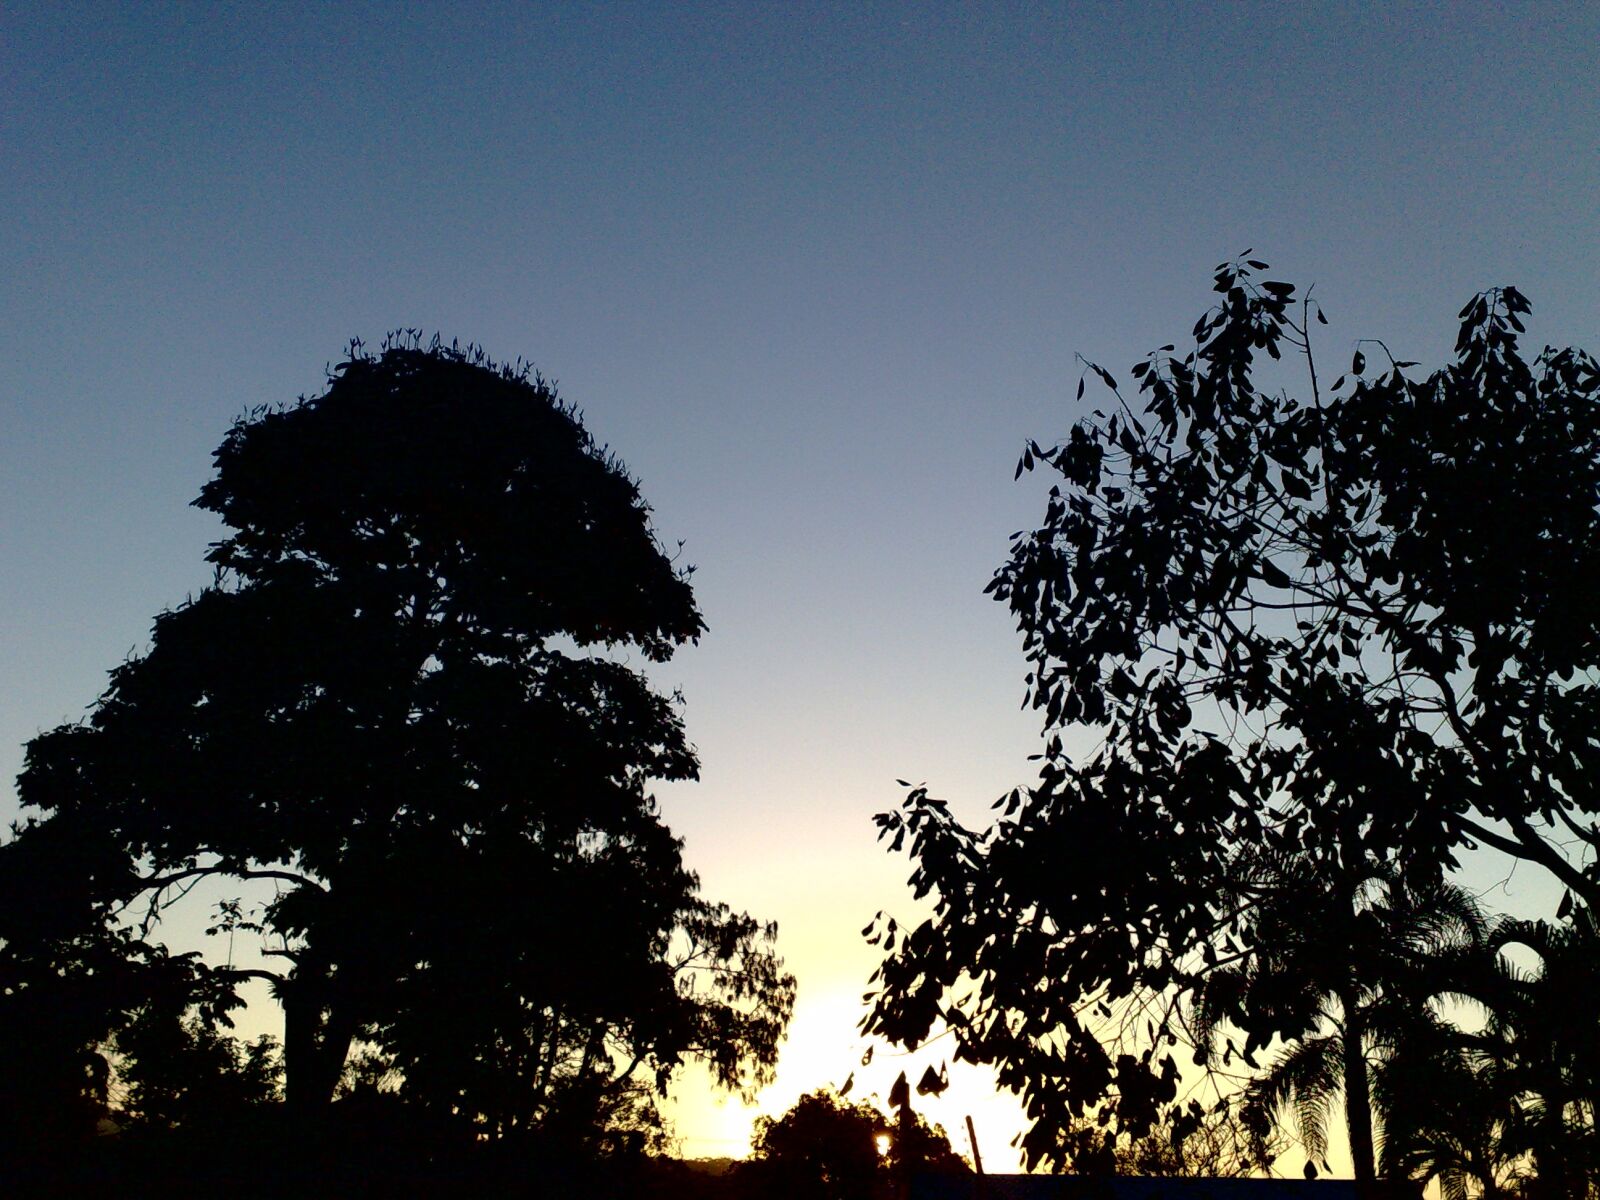 Nokia N95 sample photo. Twilight, eventide, dusk photography